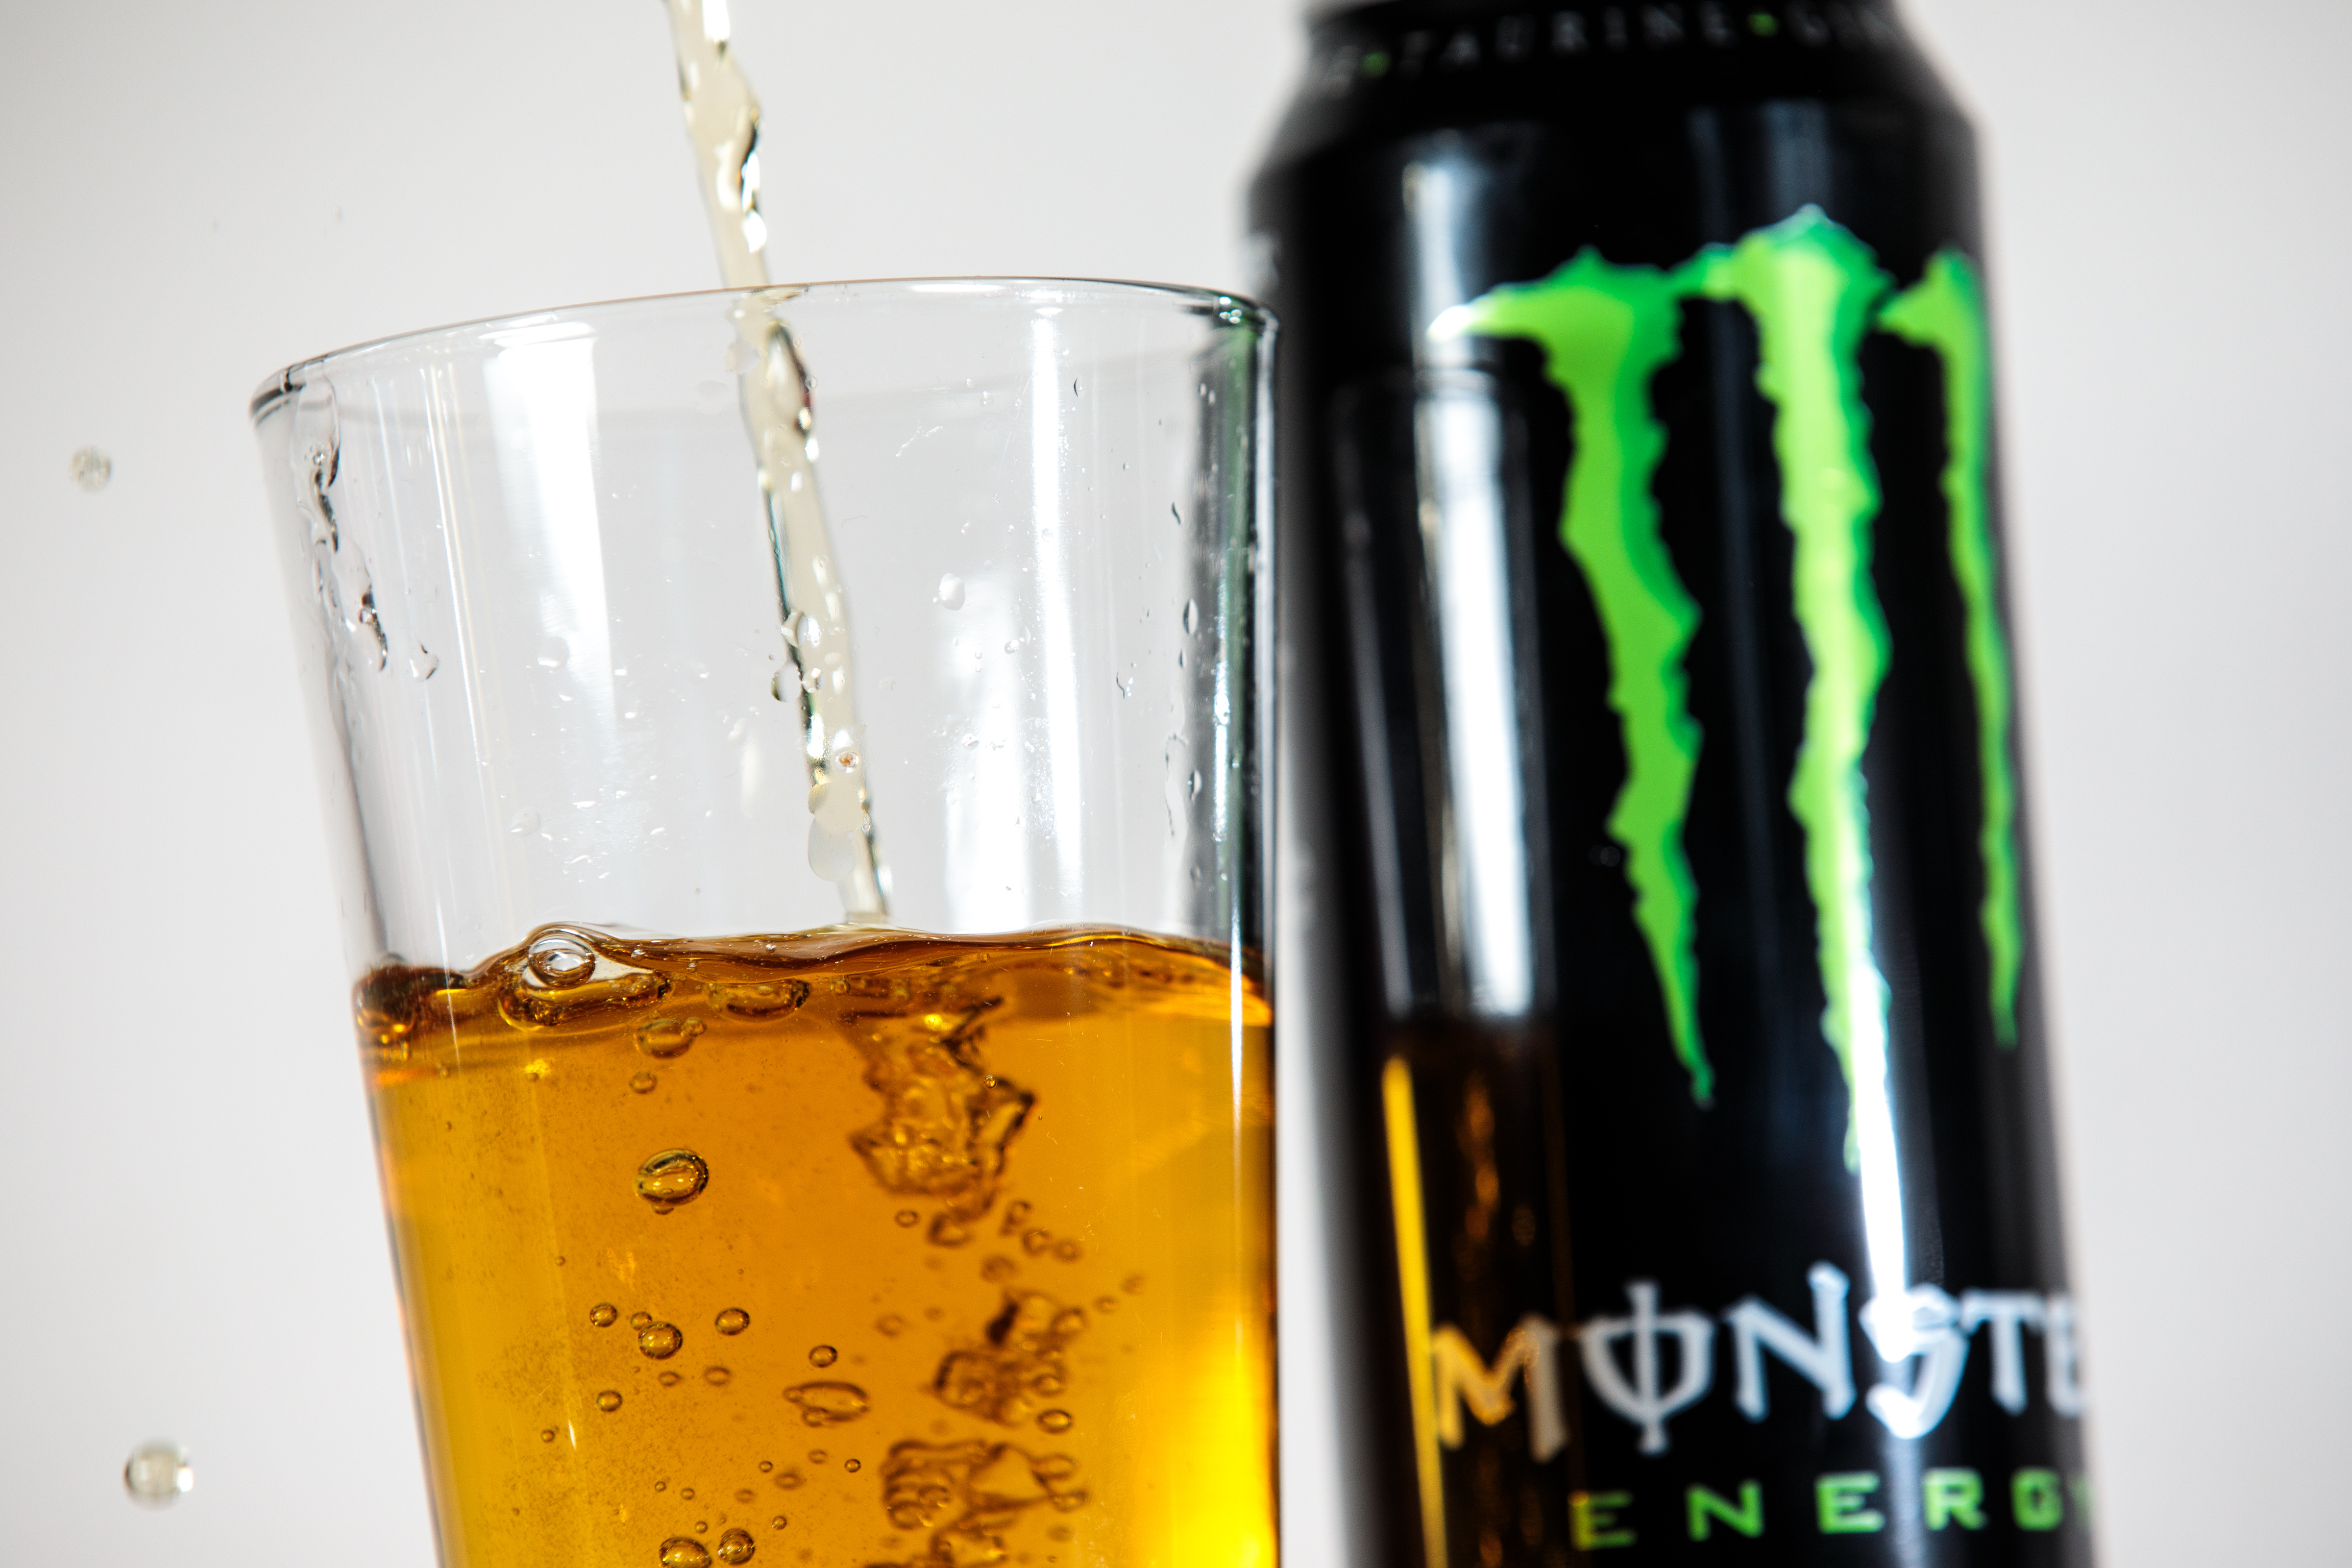 monster drink